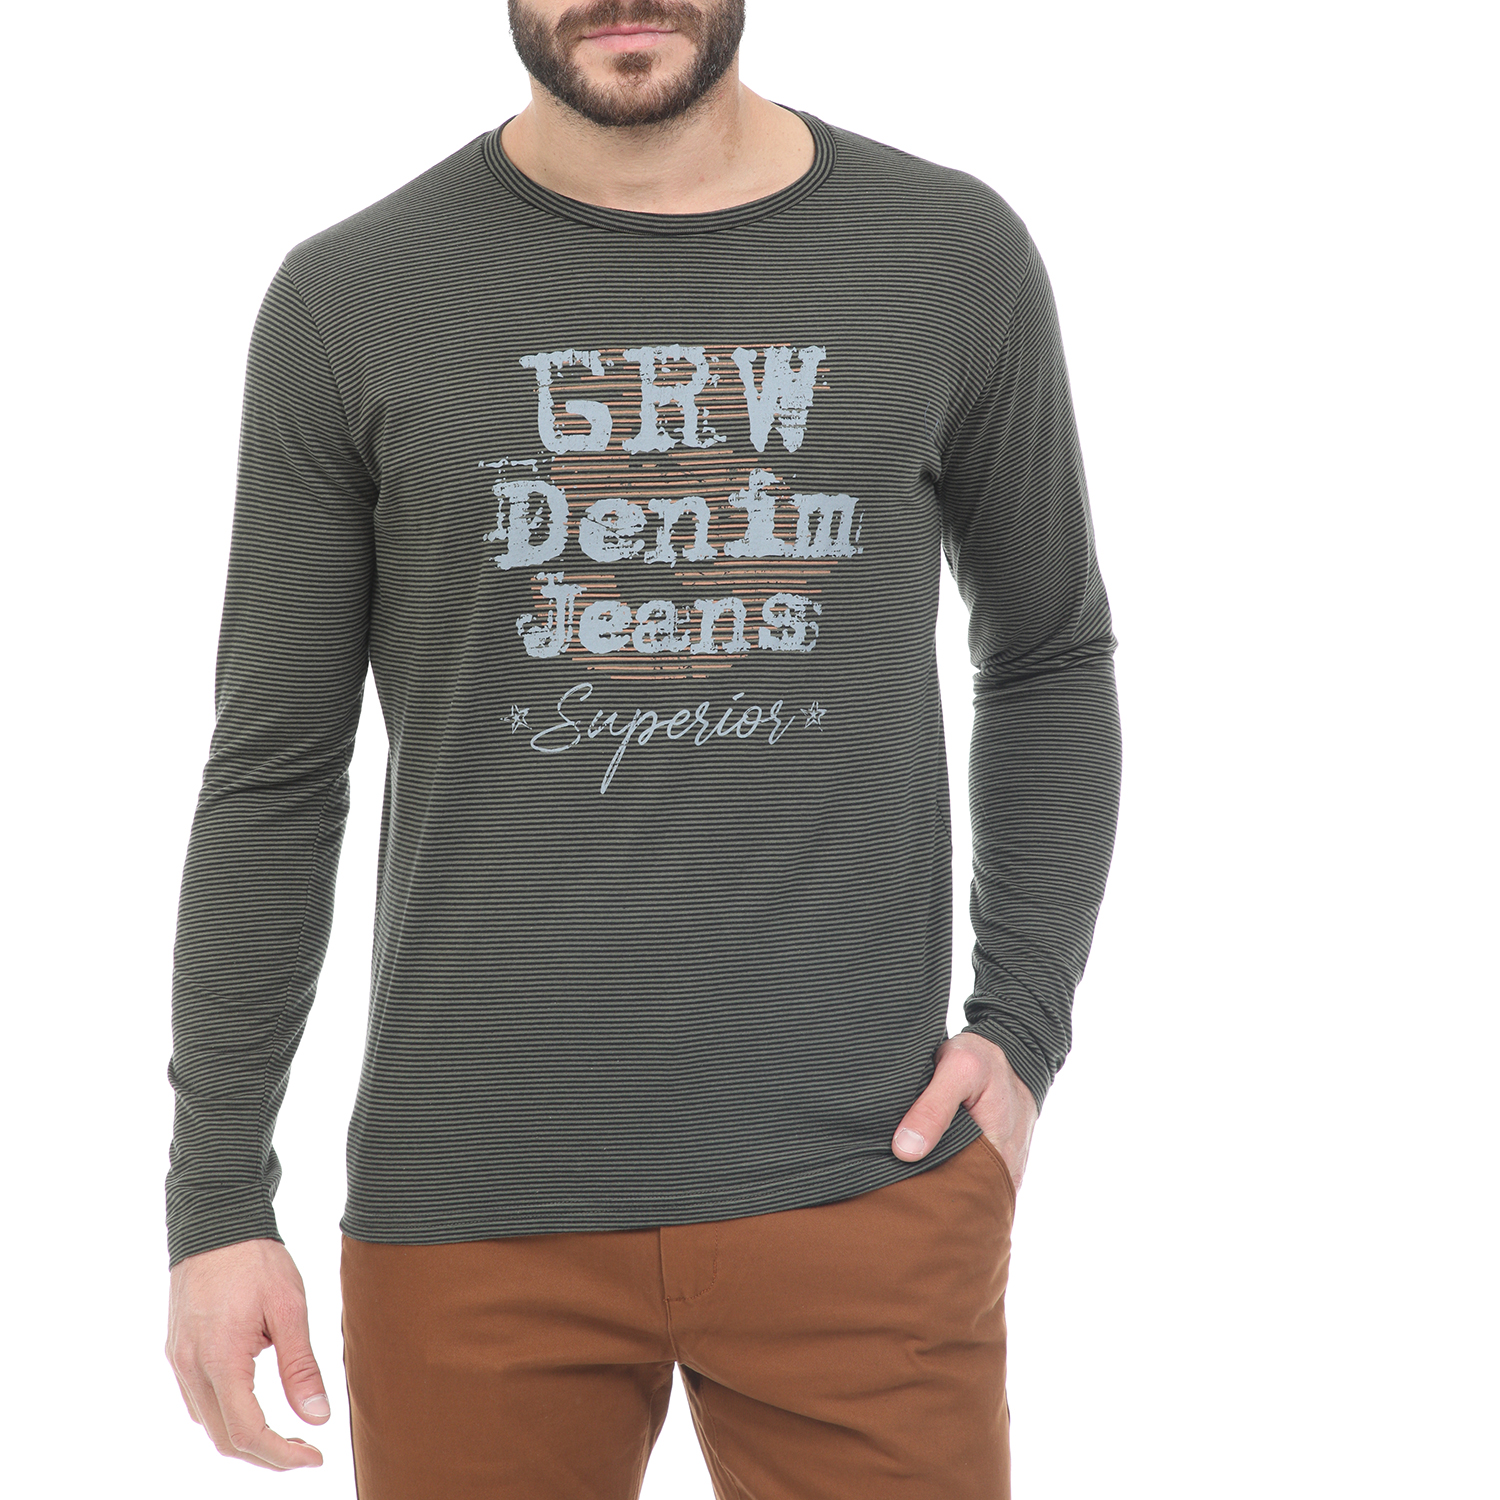 GREENWOOD - Ανδρική μπλούζα GREENWOOD χακί Ανδρικά/Ρούχα/Μπλούζες/Μακρυμάνικες